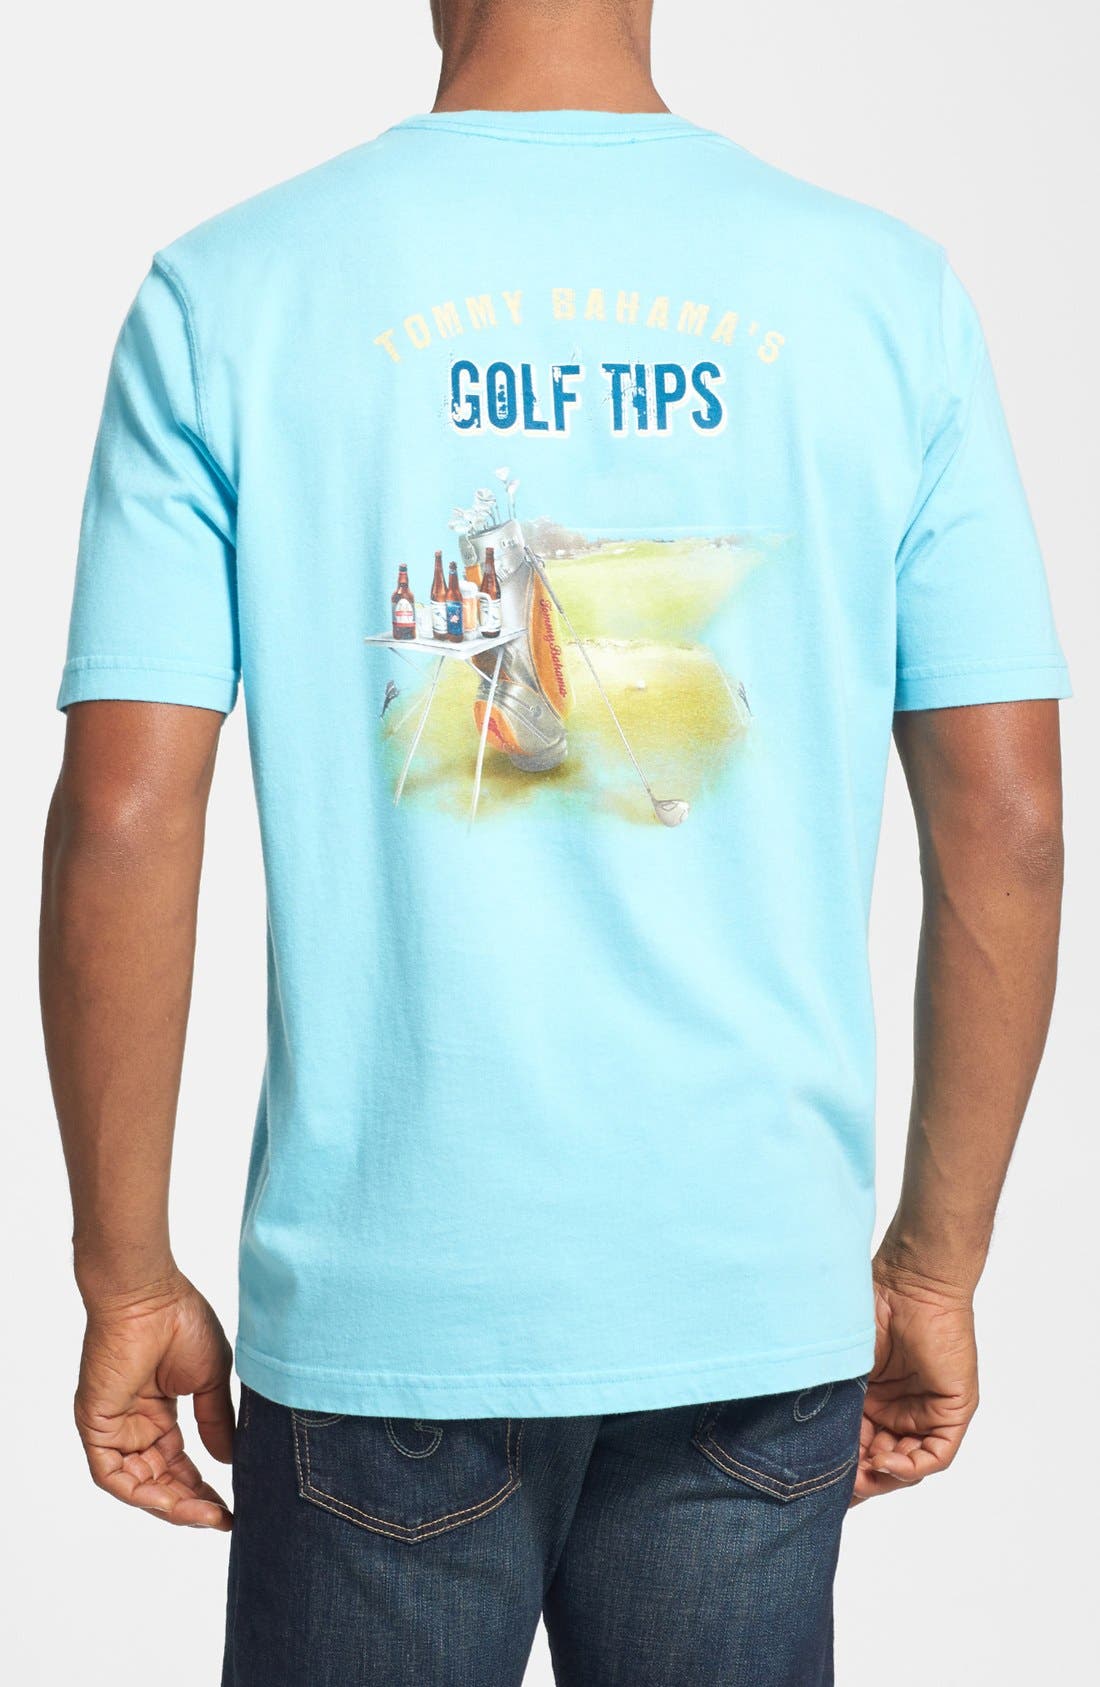 Tommy Bahama 'Golf Tips' T-Shirt 